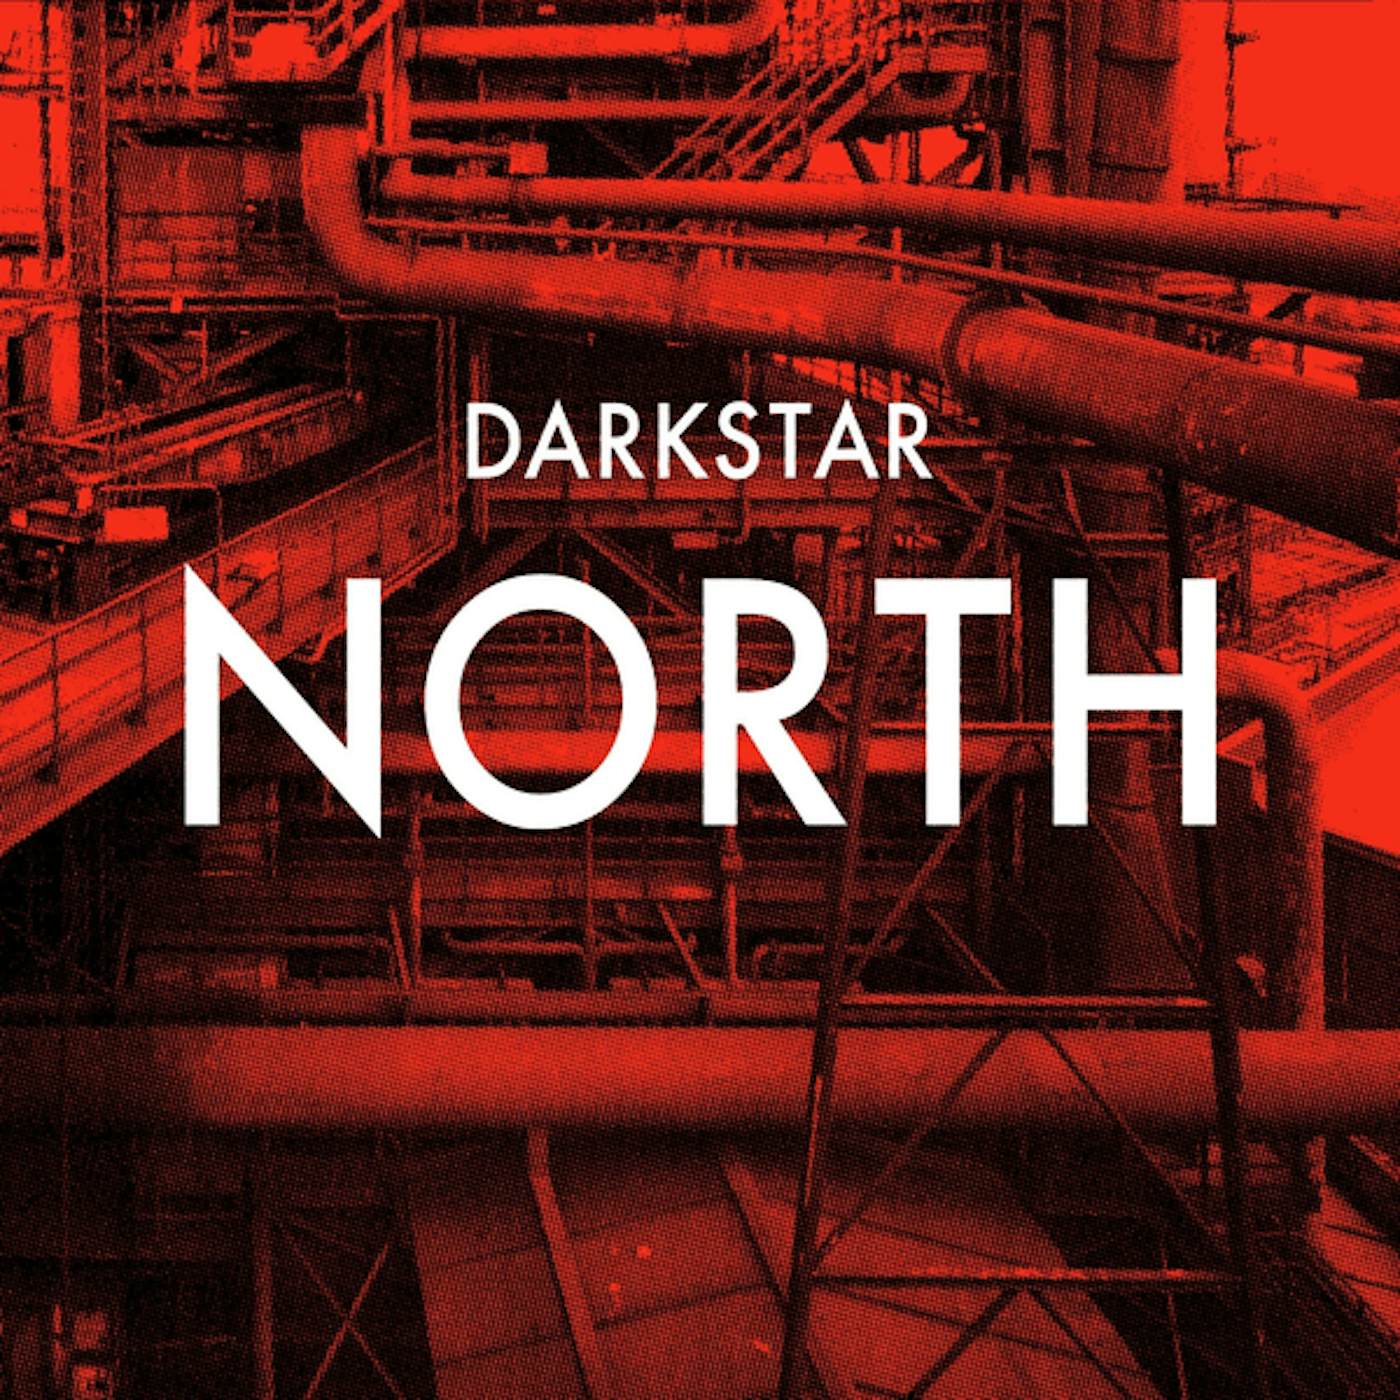 Darkstar North Lp Vinyl Record